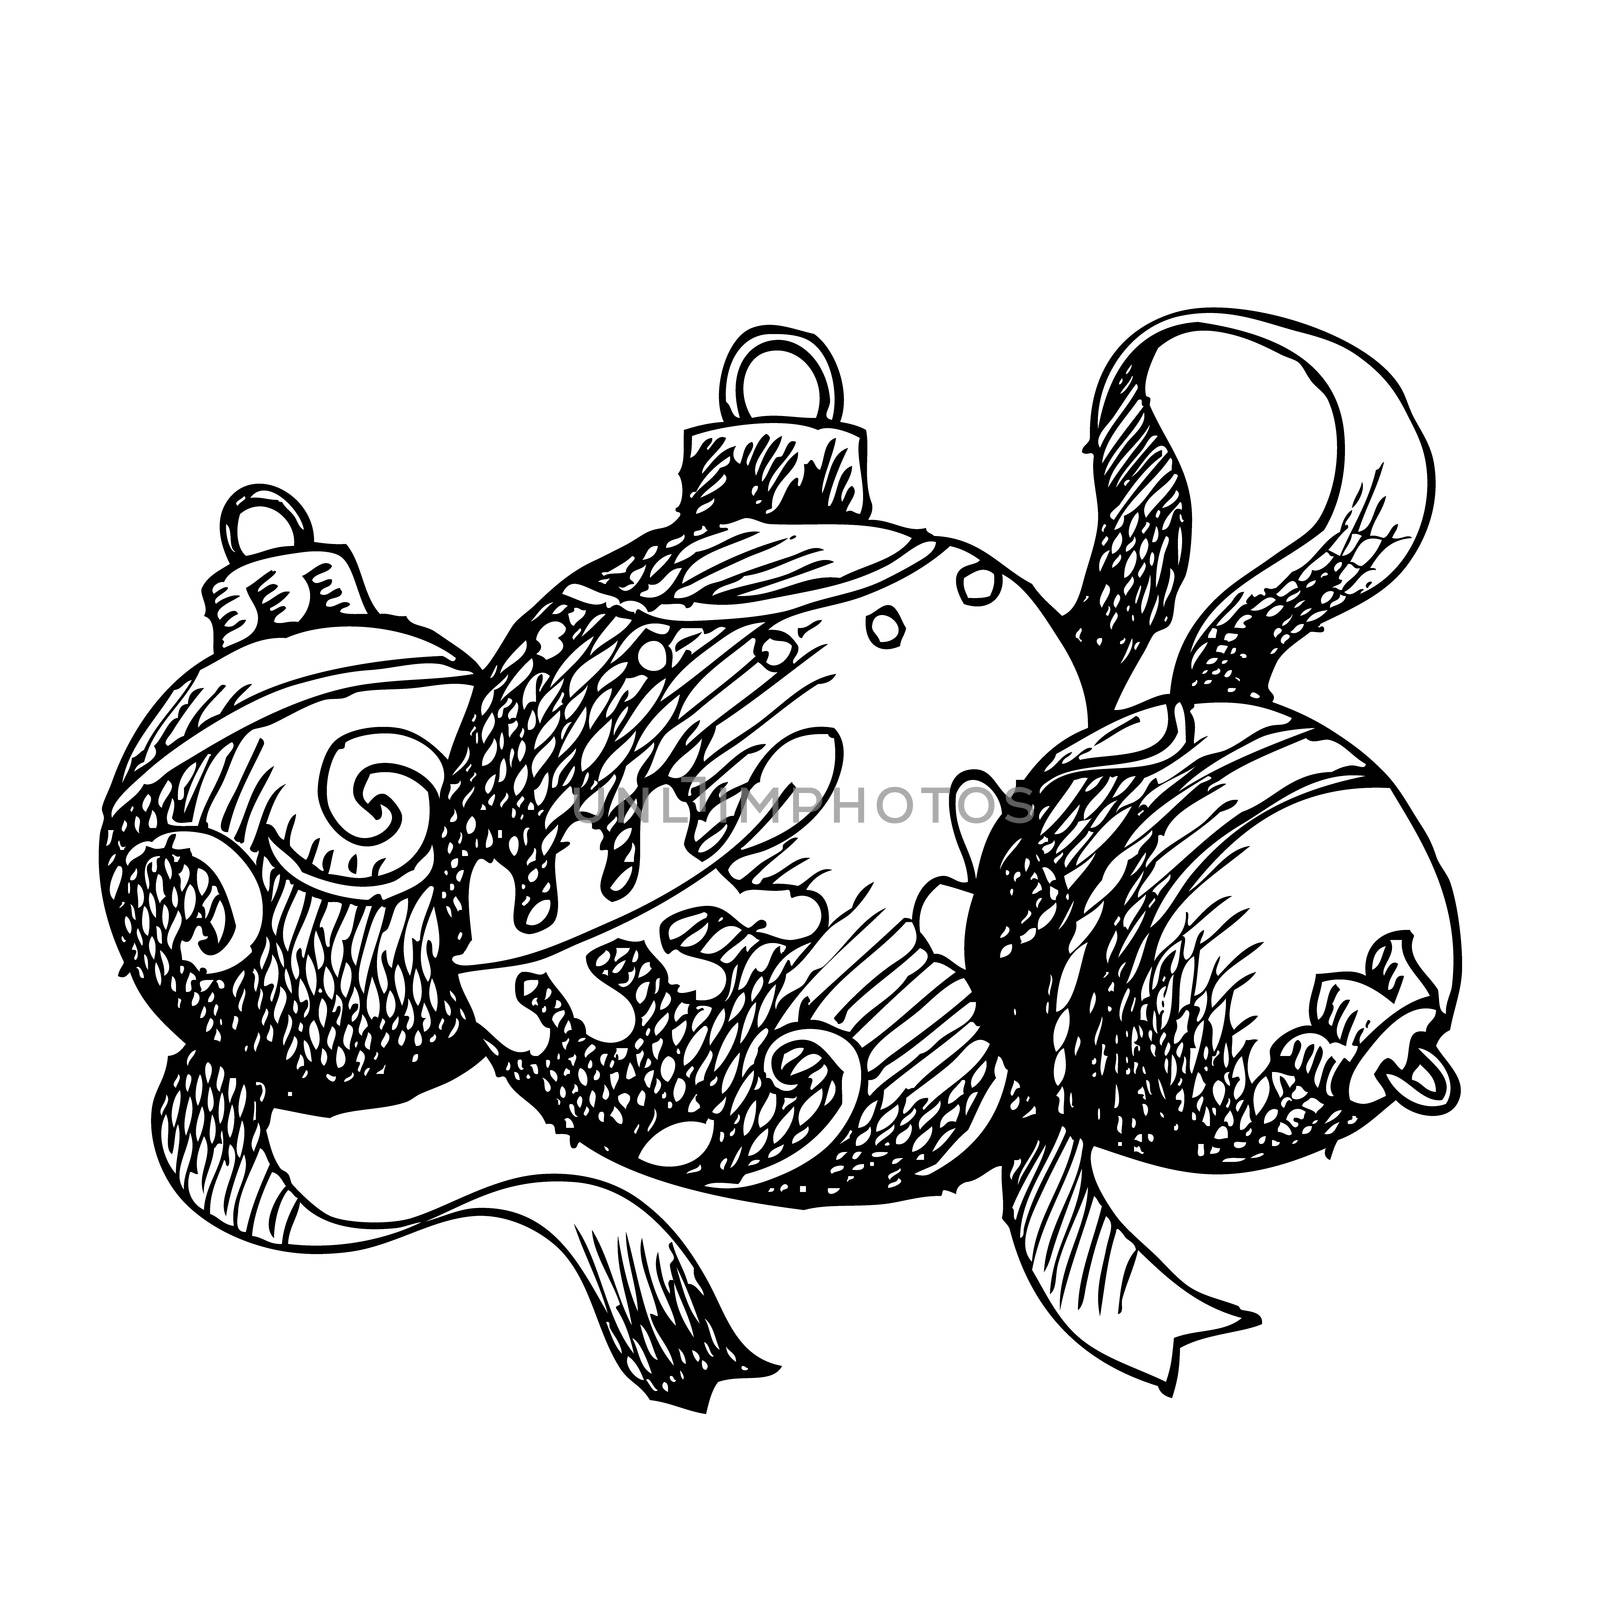 Freehand illustration of grunge Christmas balls on white background, doodle hand drawn